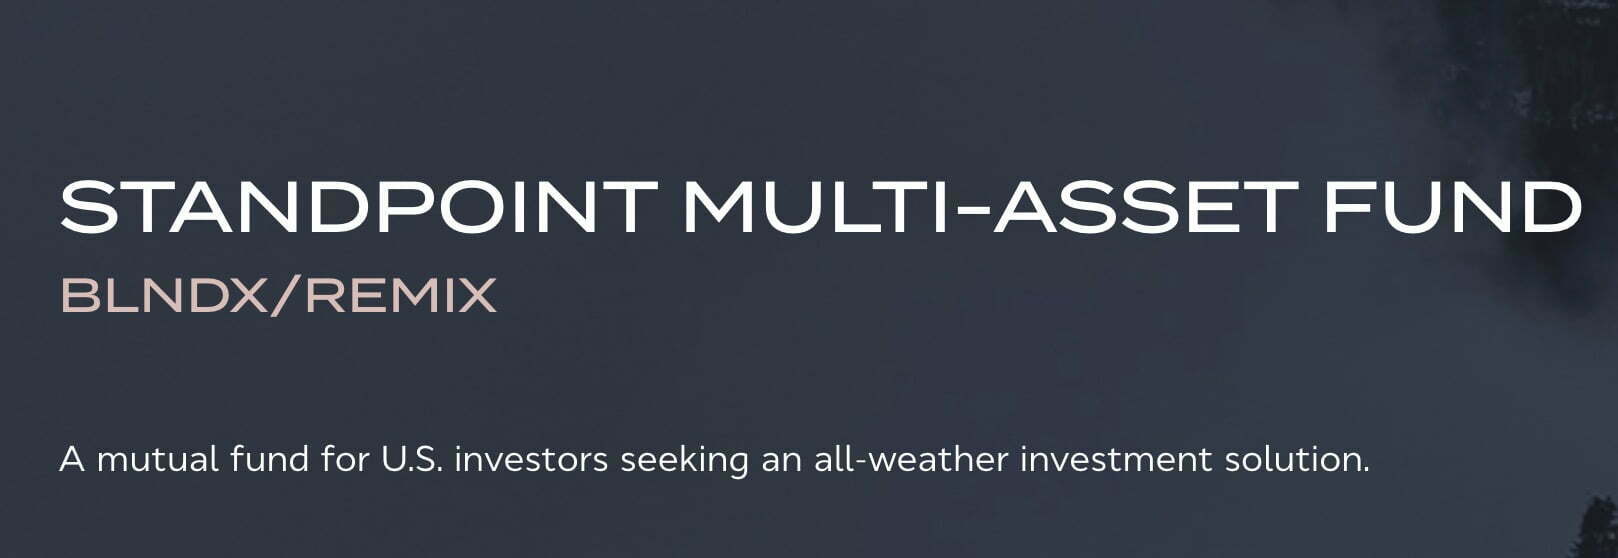 Standpoint Multi-Asset Fund BLNDX REMIX Logo